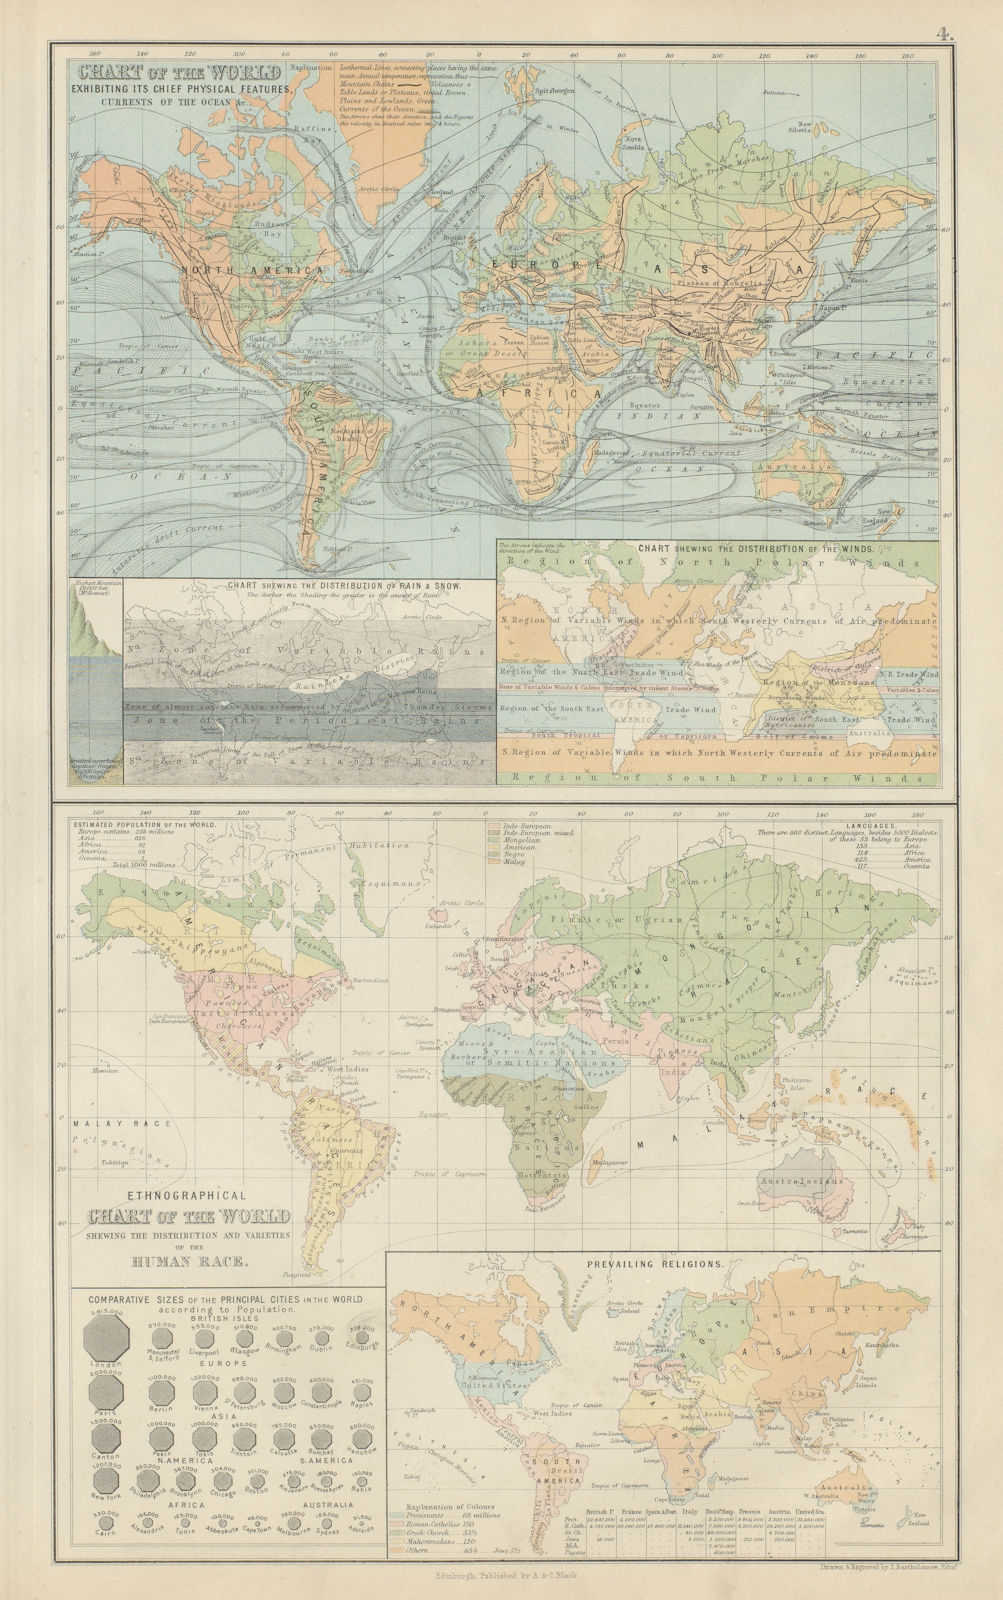 Associate Product Physical & Ethnographical Charts of the World. Ethnic. BARTHOLOMEW 1882 map